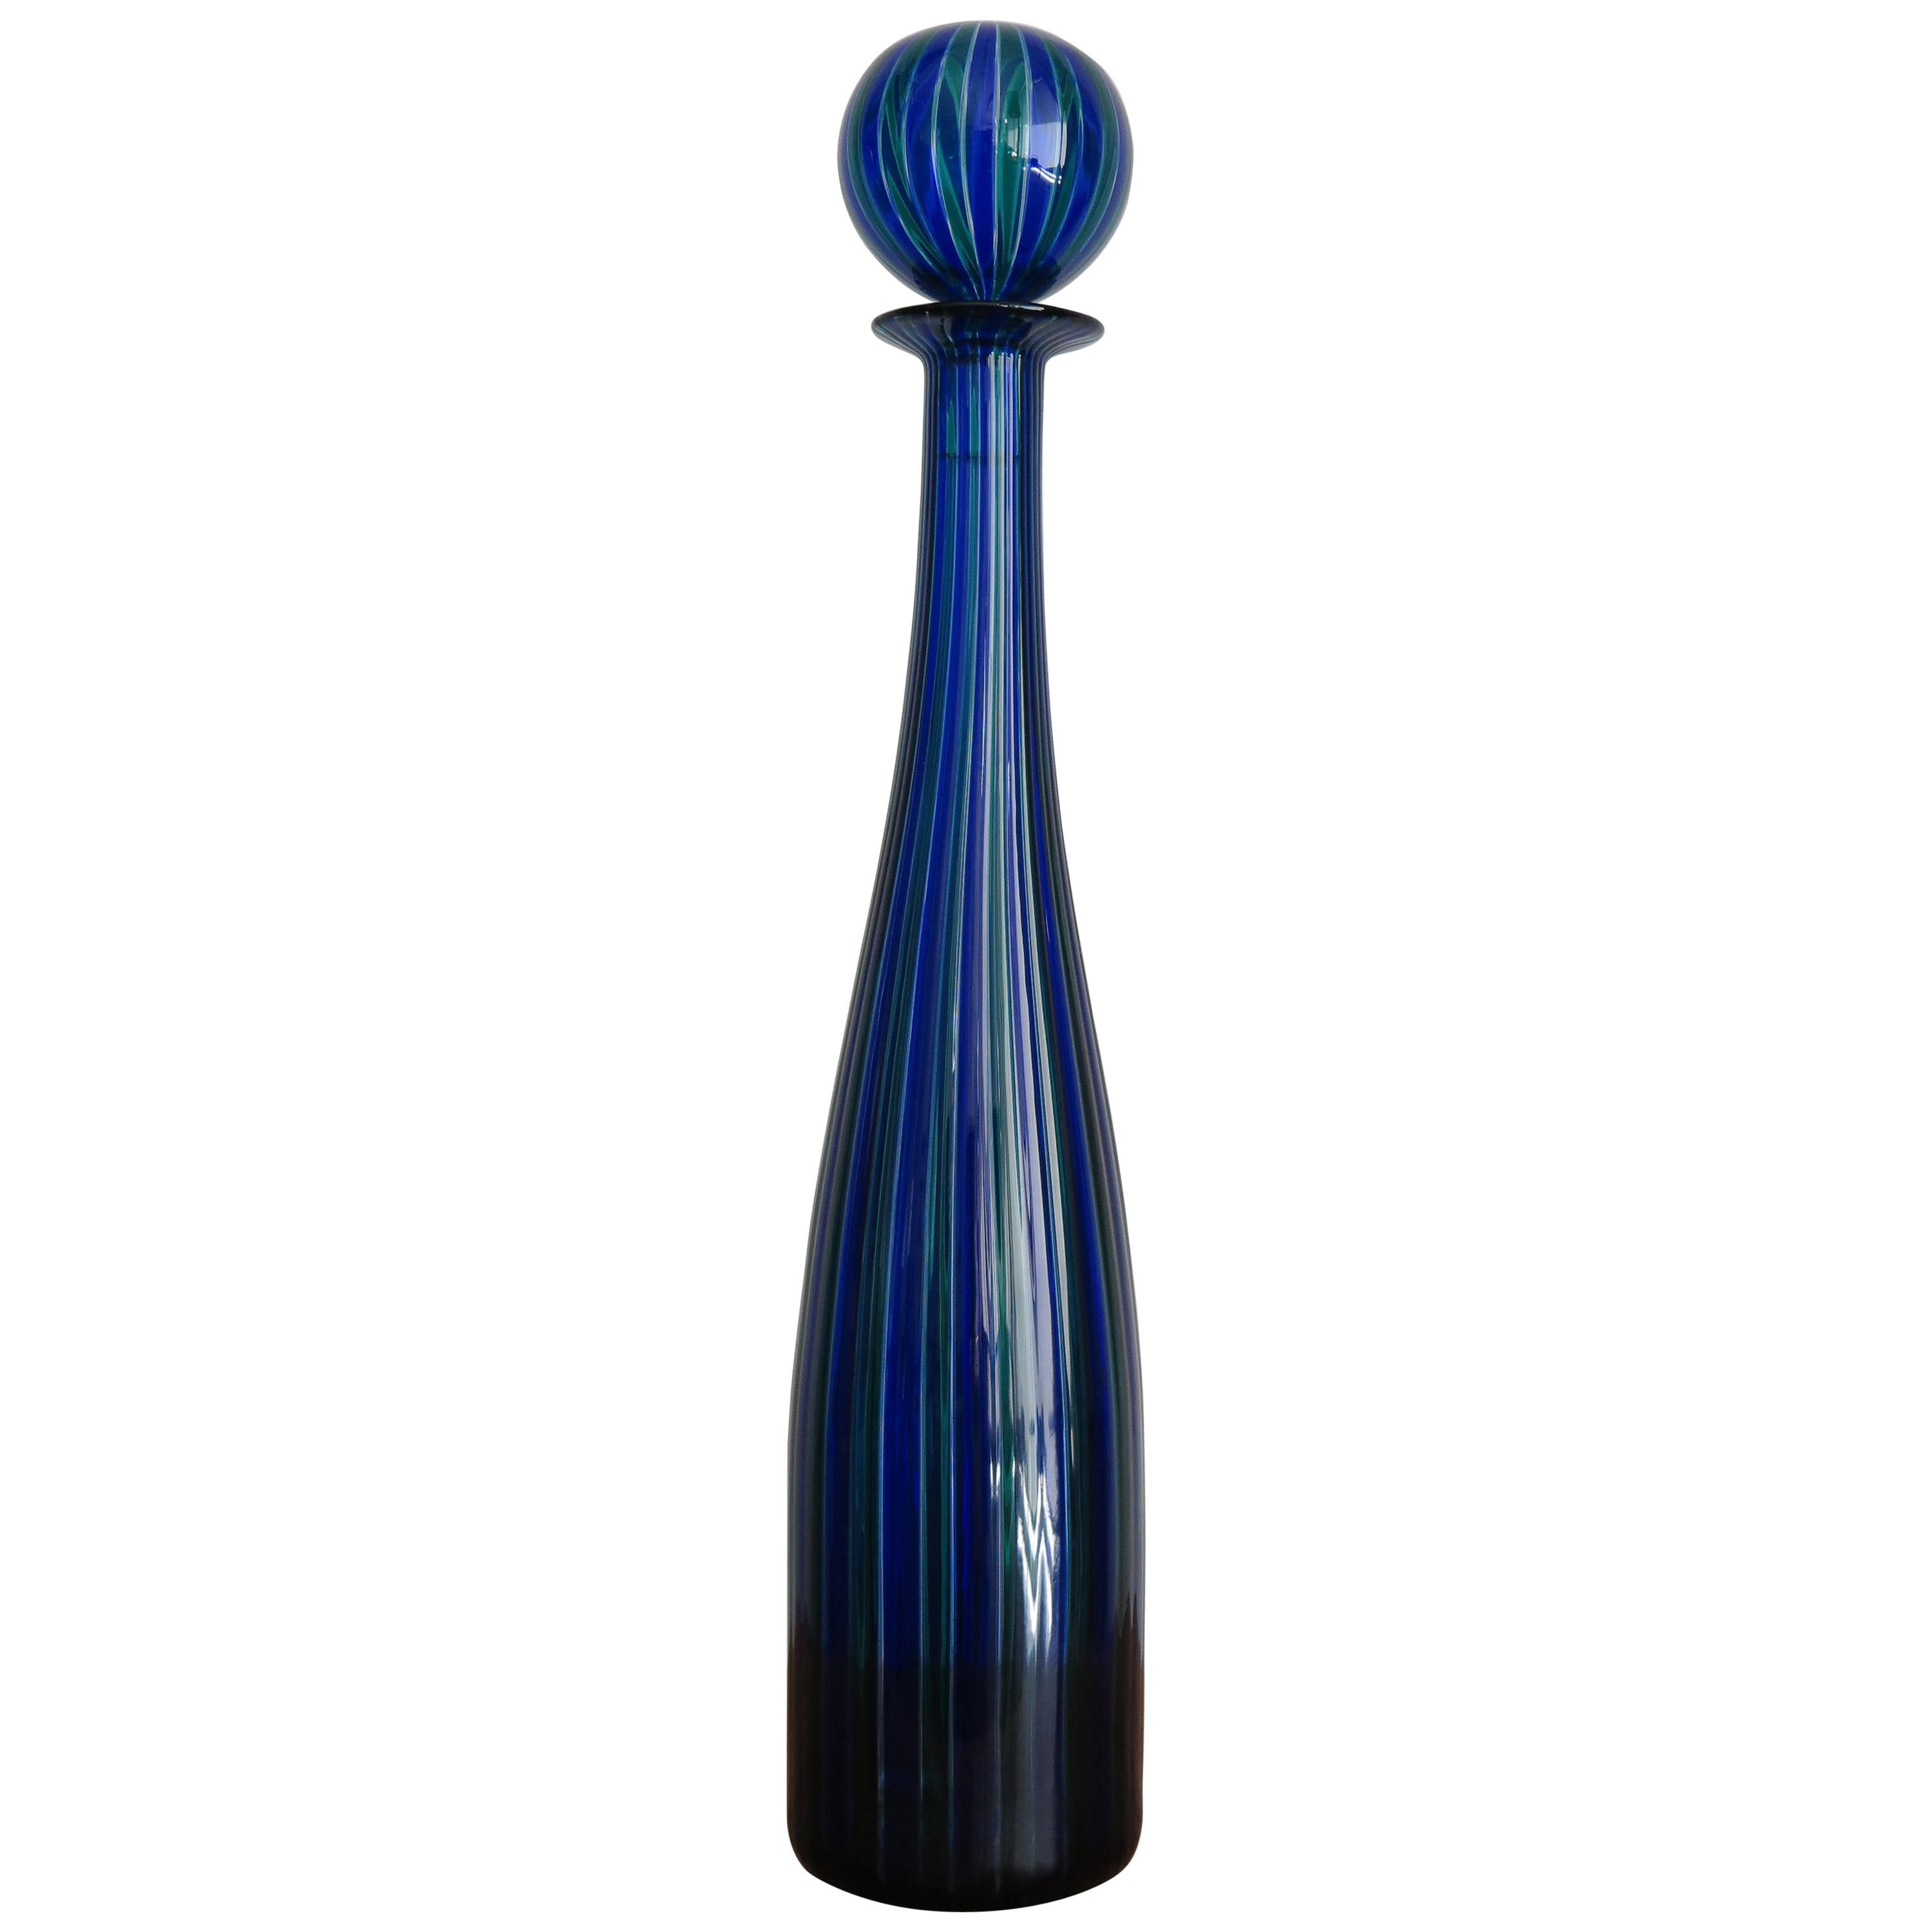 Gio Ponti for Venini Serie “Morandiane” Blue and Green Glass Bottle, 2004